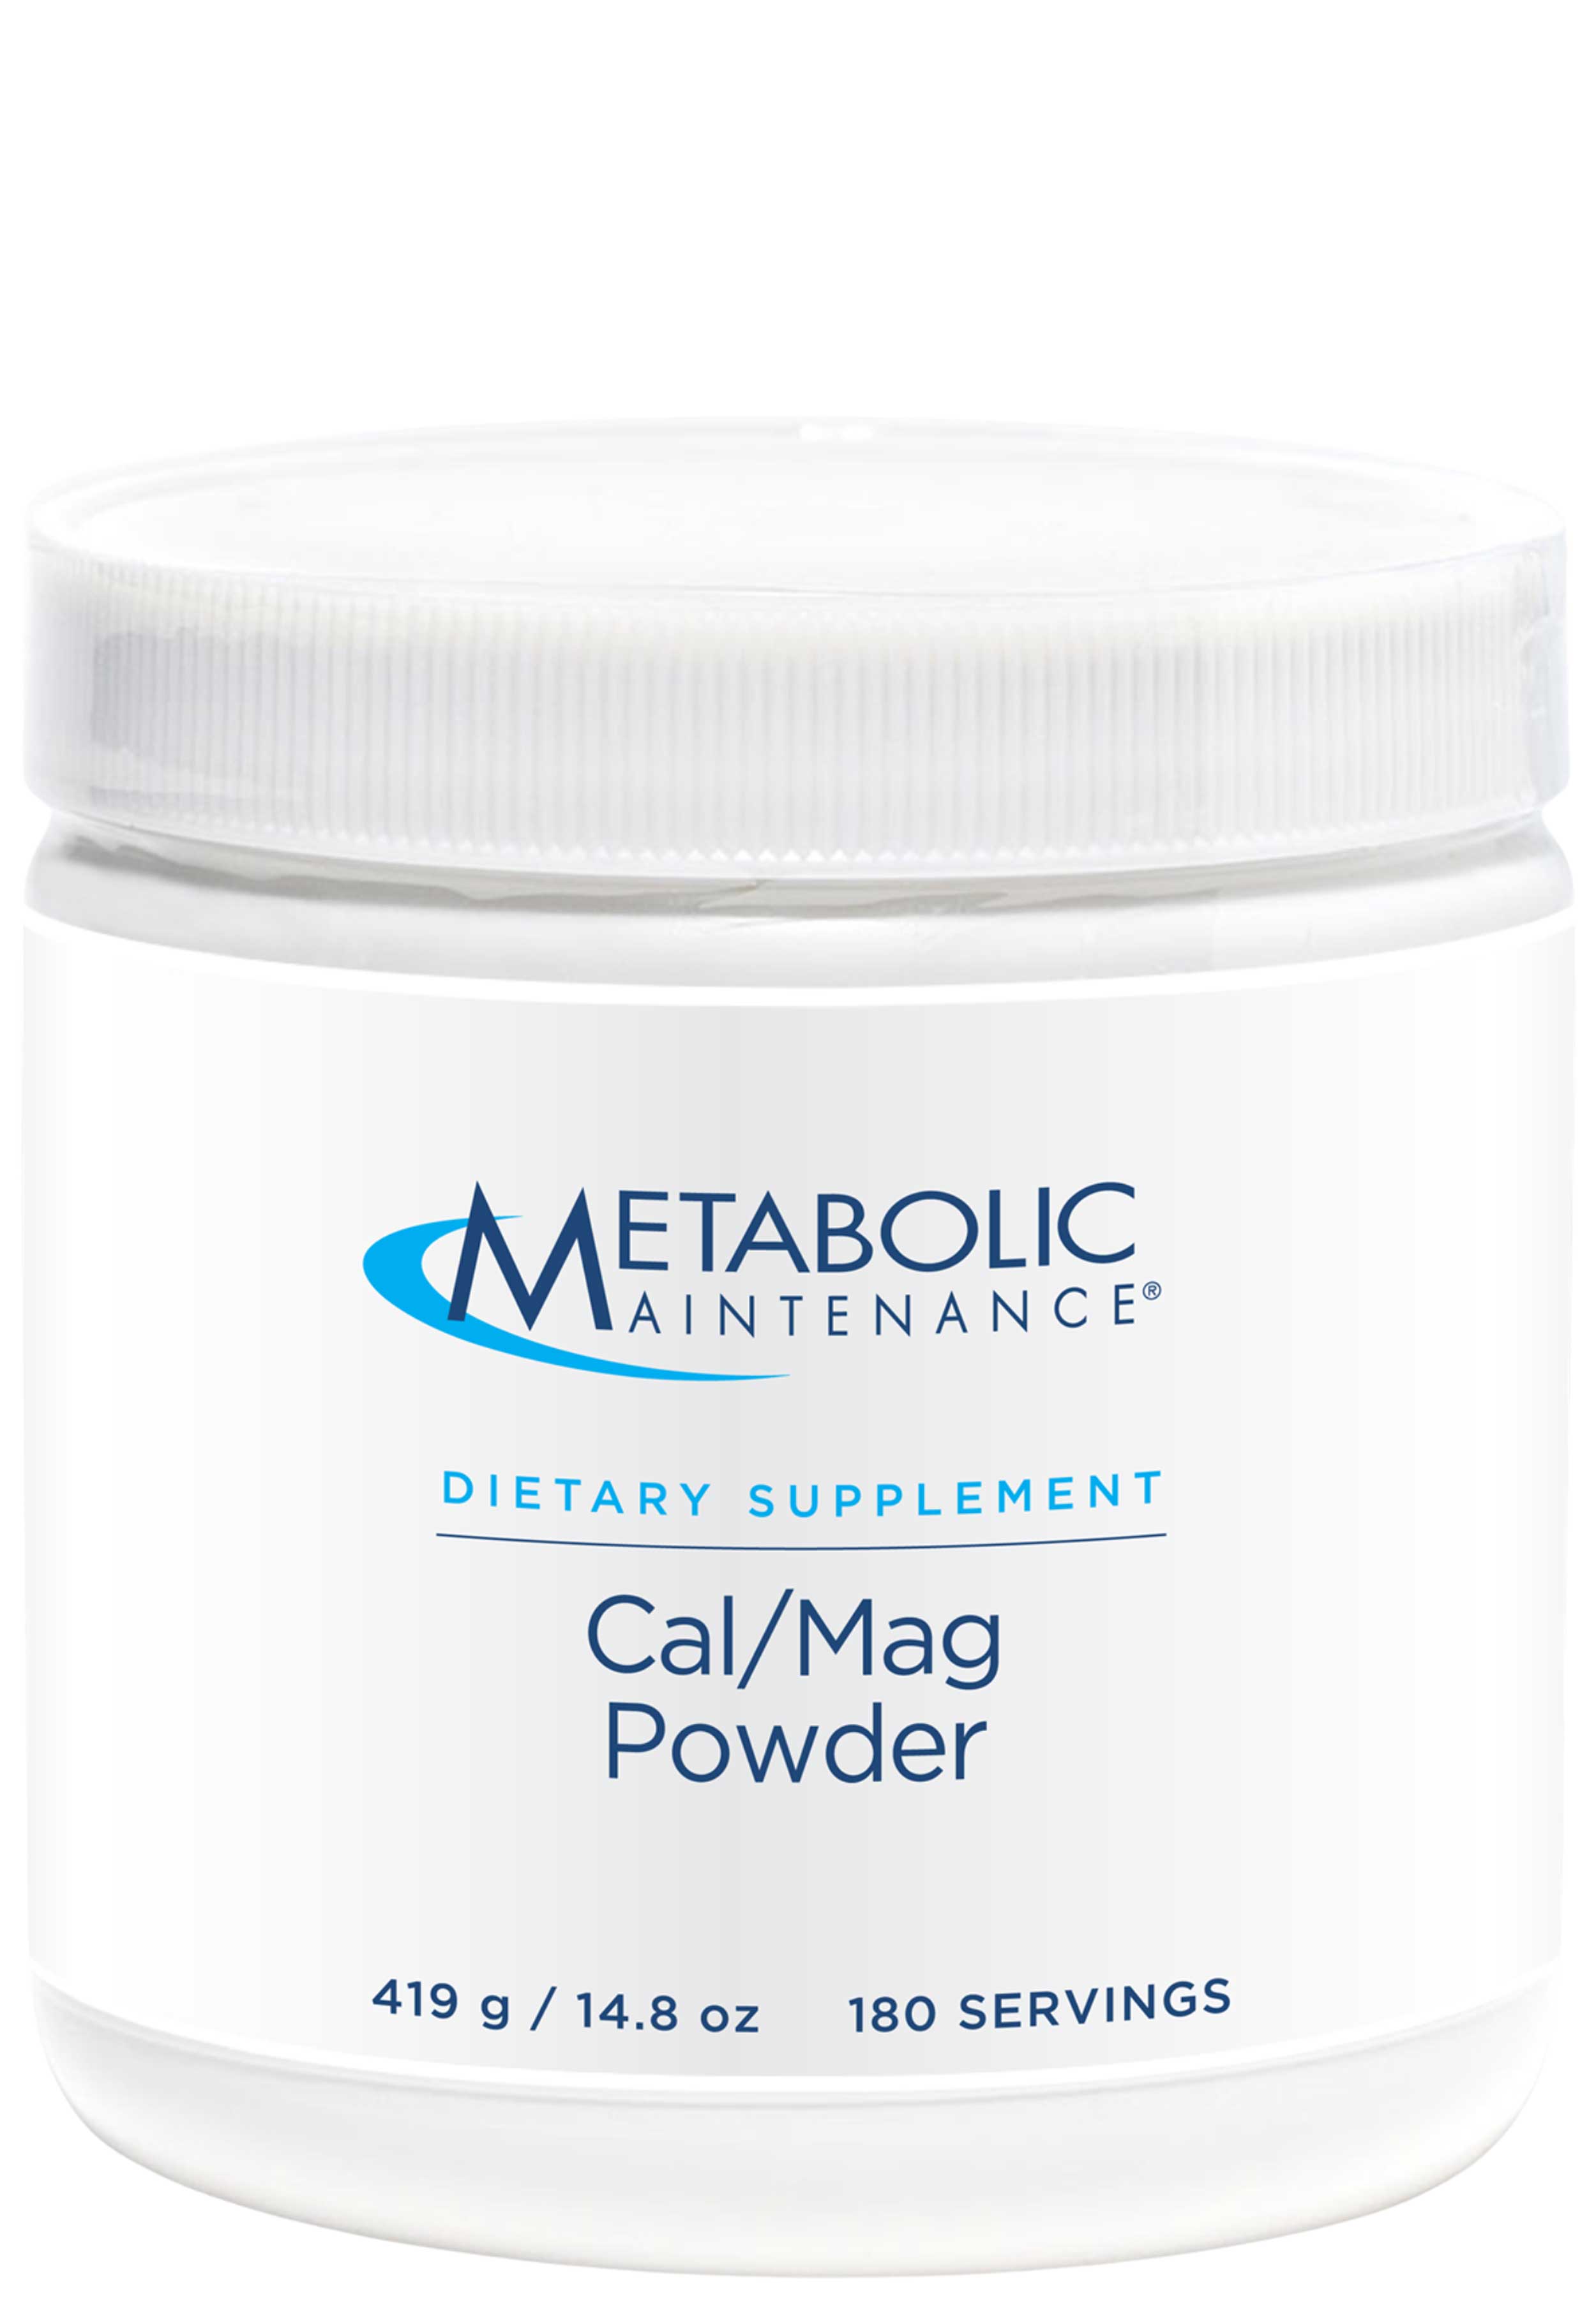 Metabolic Maintenance Cal/Mag Powder